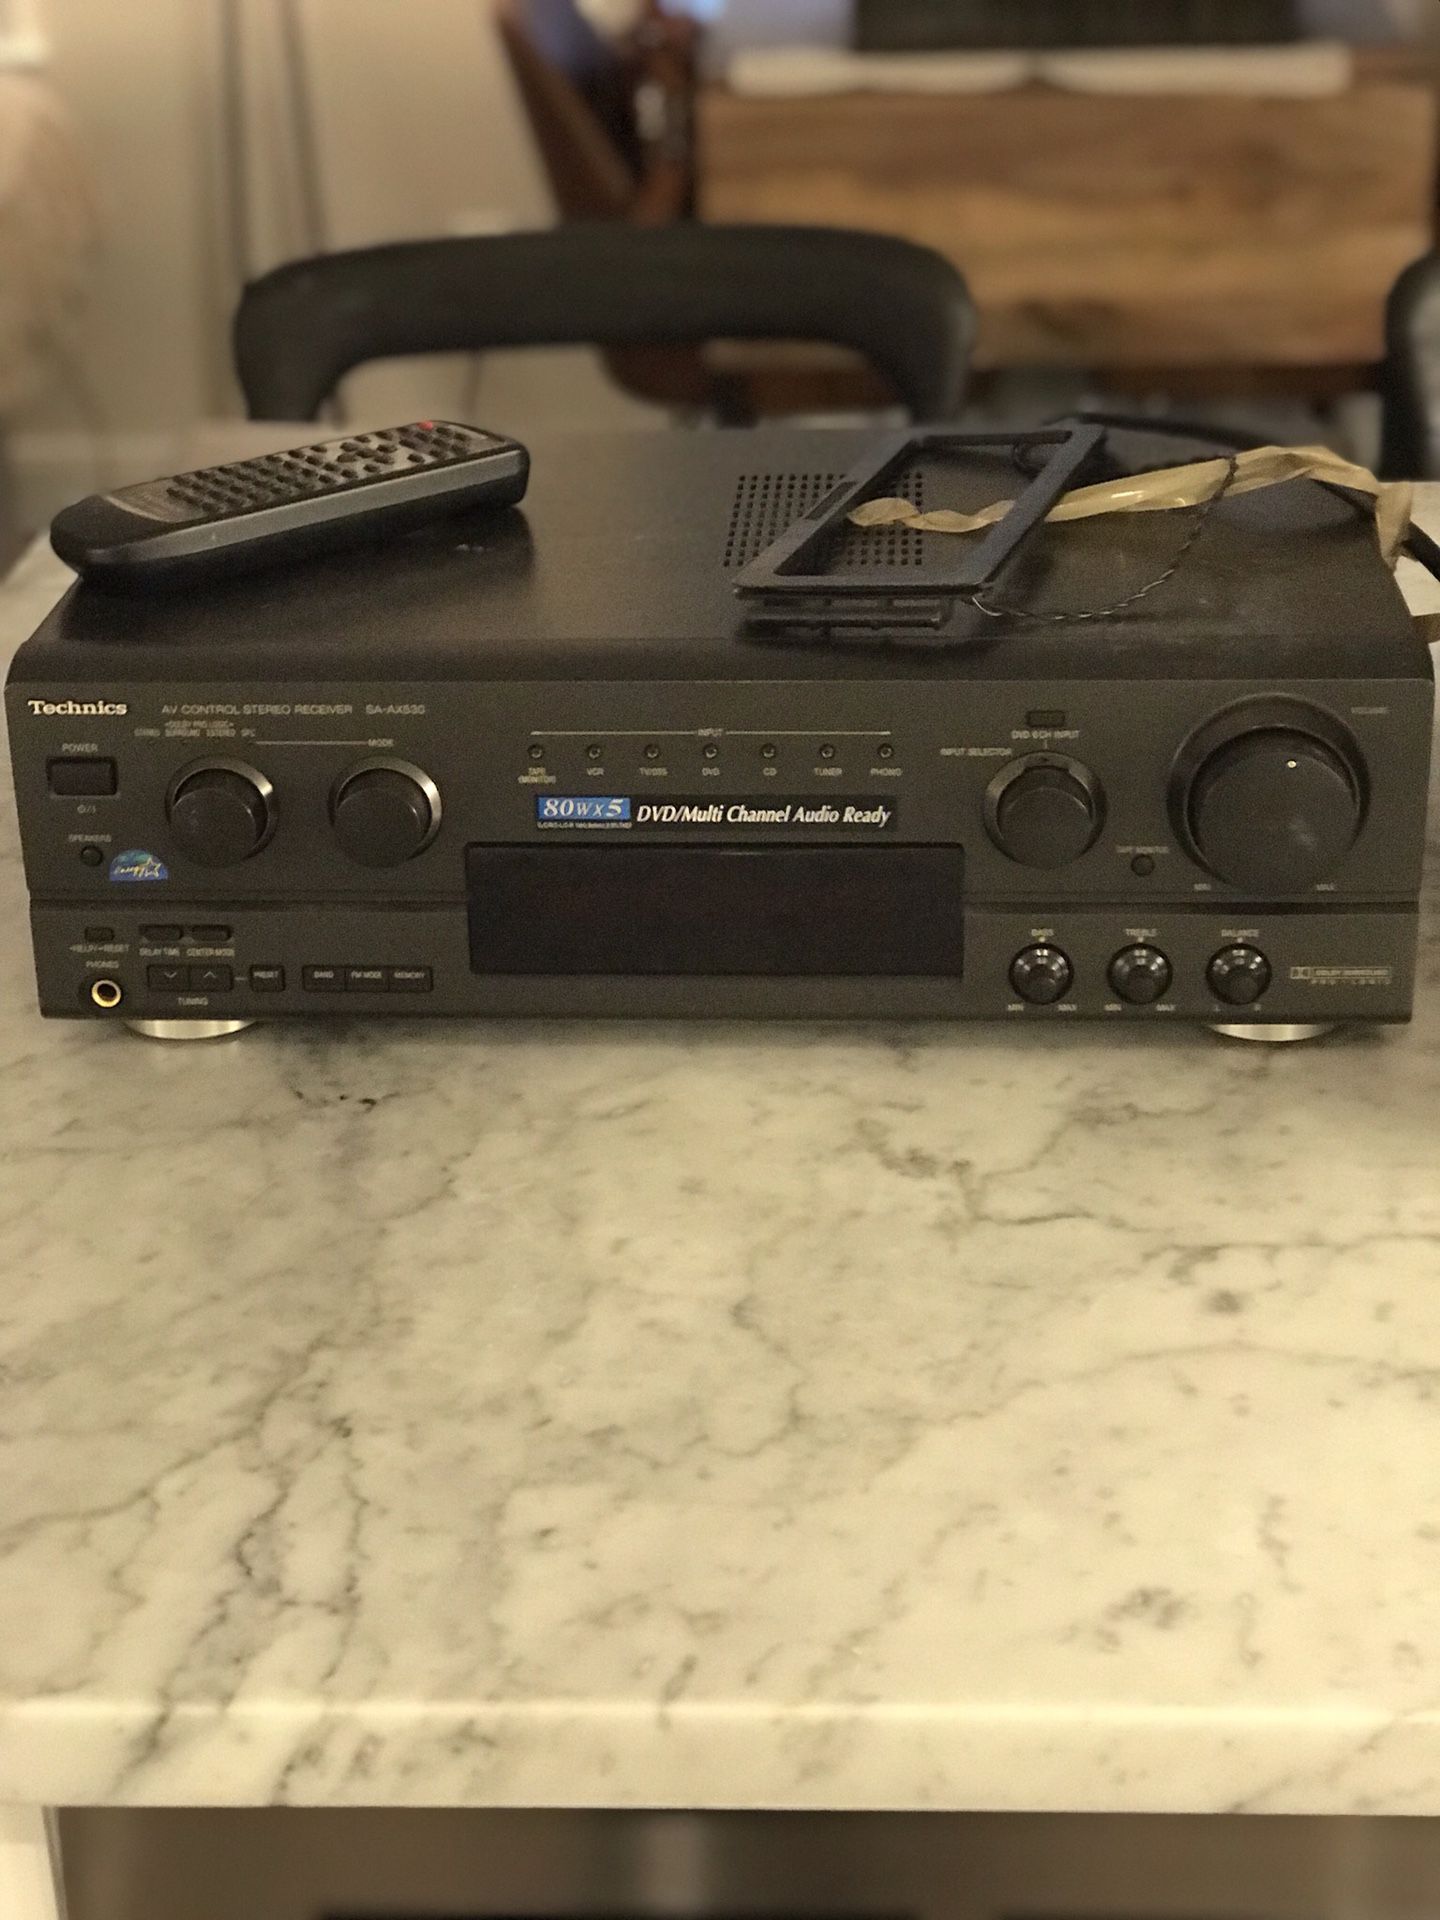 Technics AV control stereo receiver Model SA-AX503